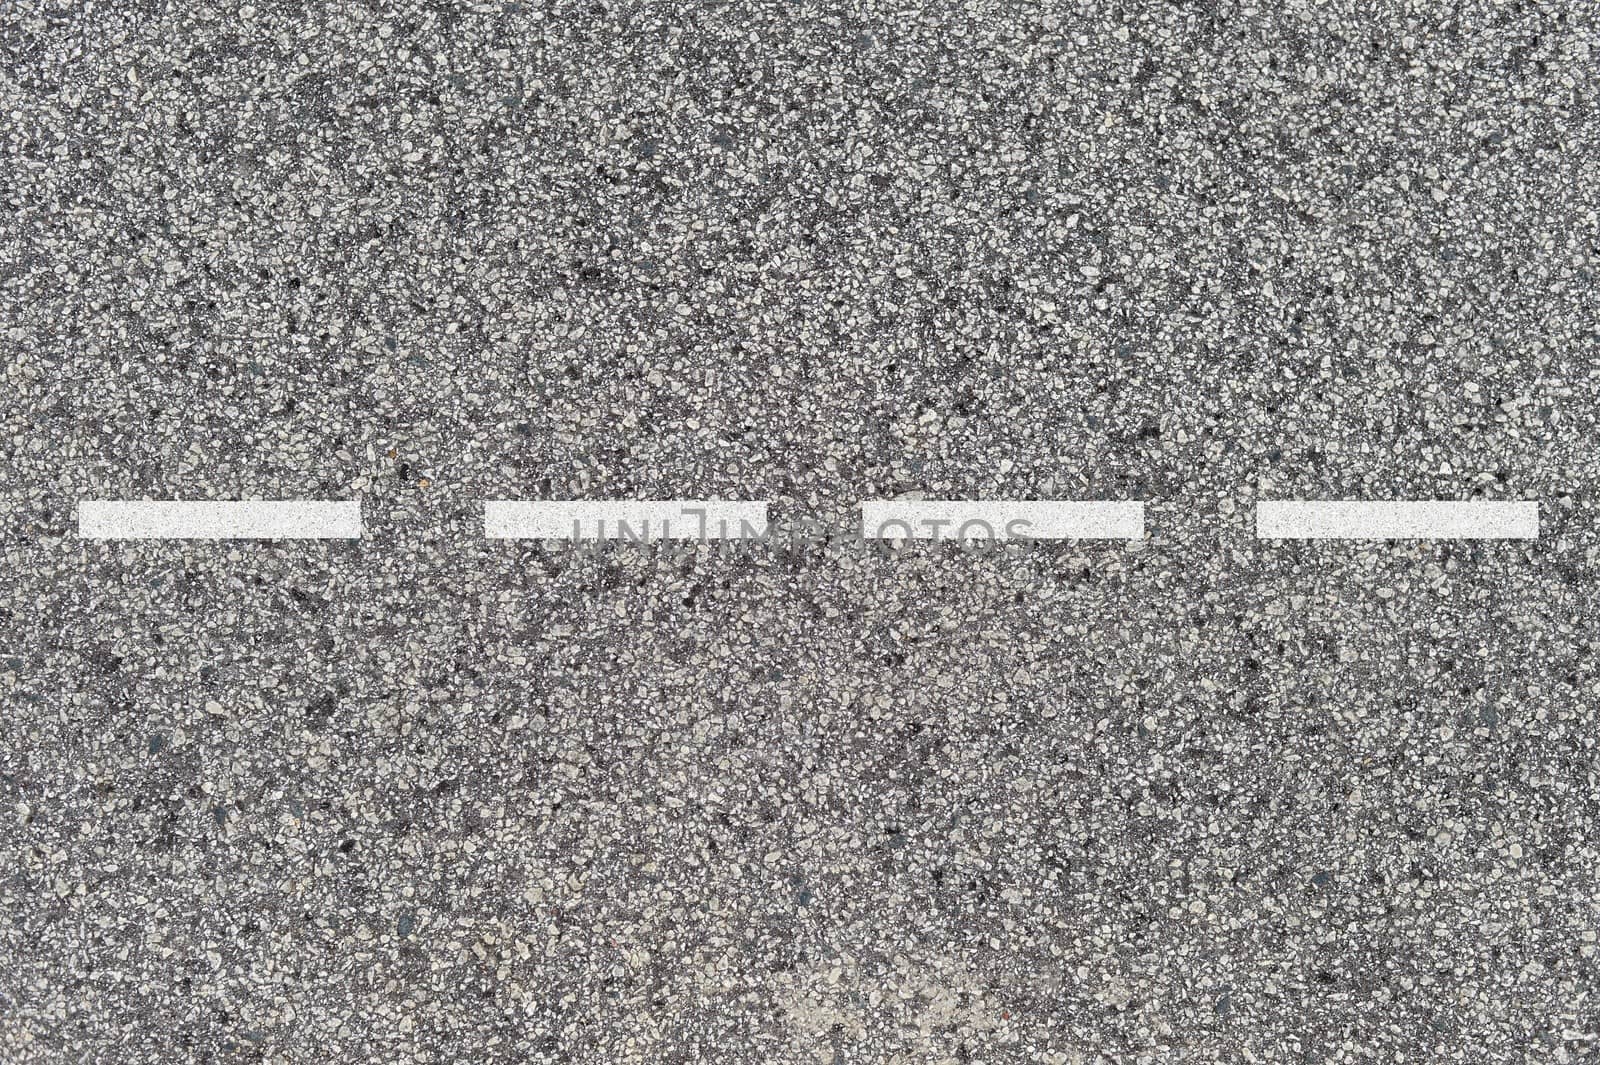 A close up shot of road markings